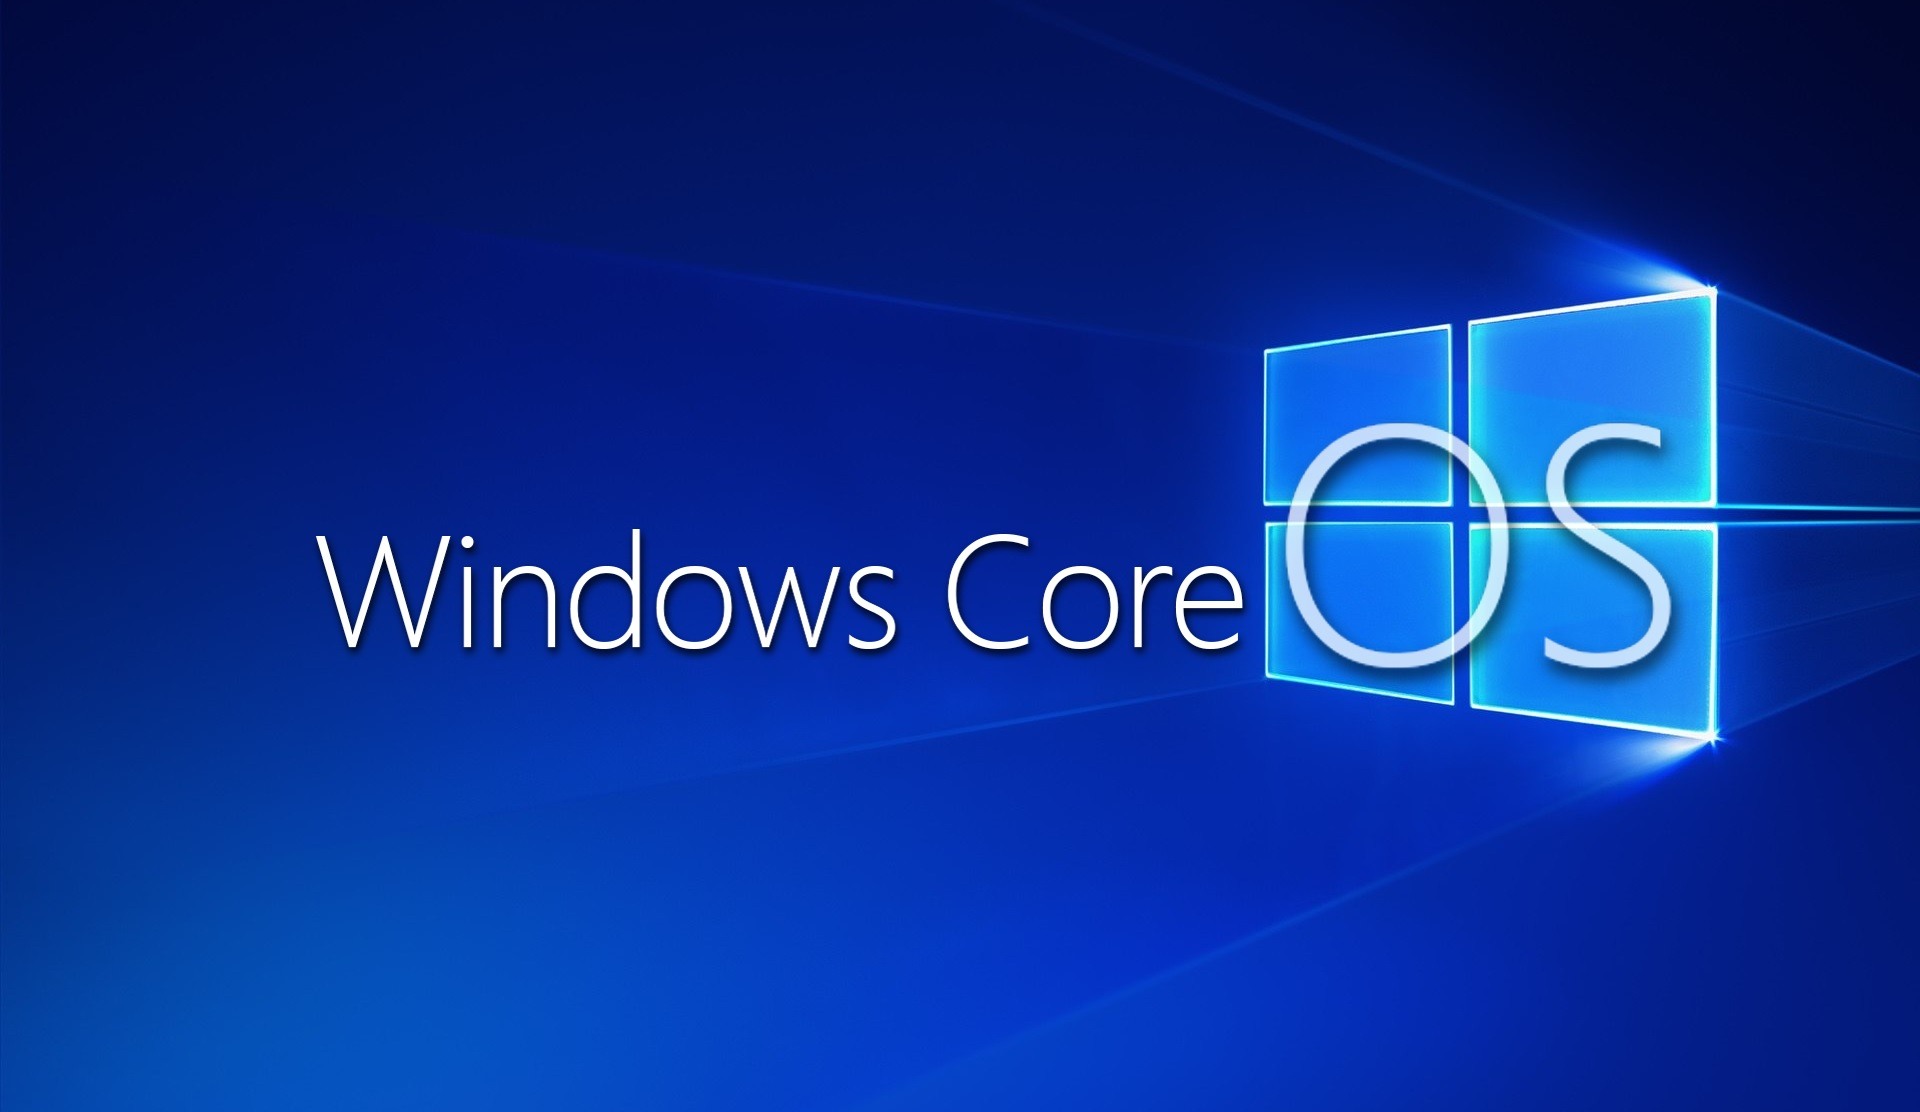 Windows Core OS - Modulares Windows 10 soll neue Geräte mitbringen